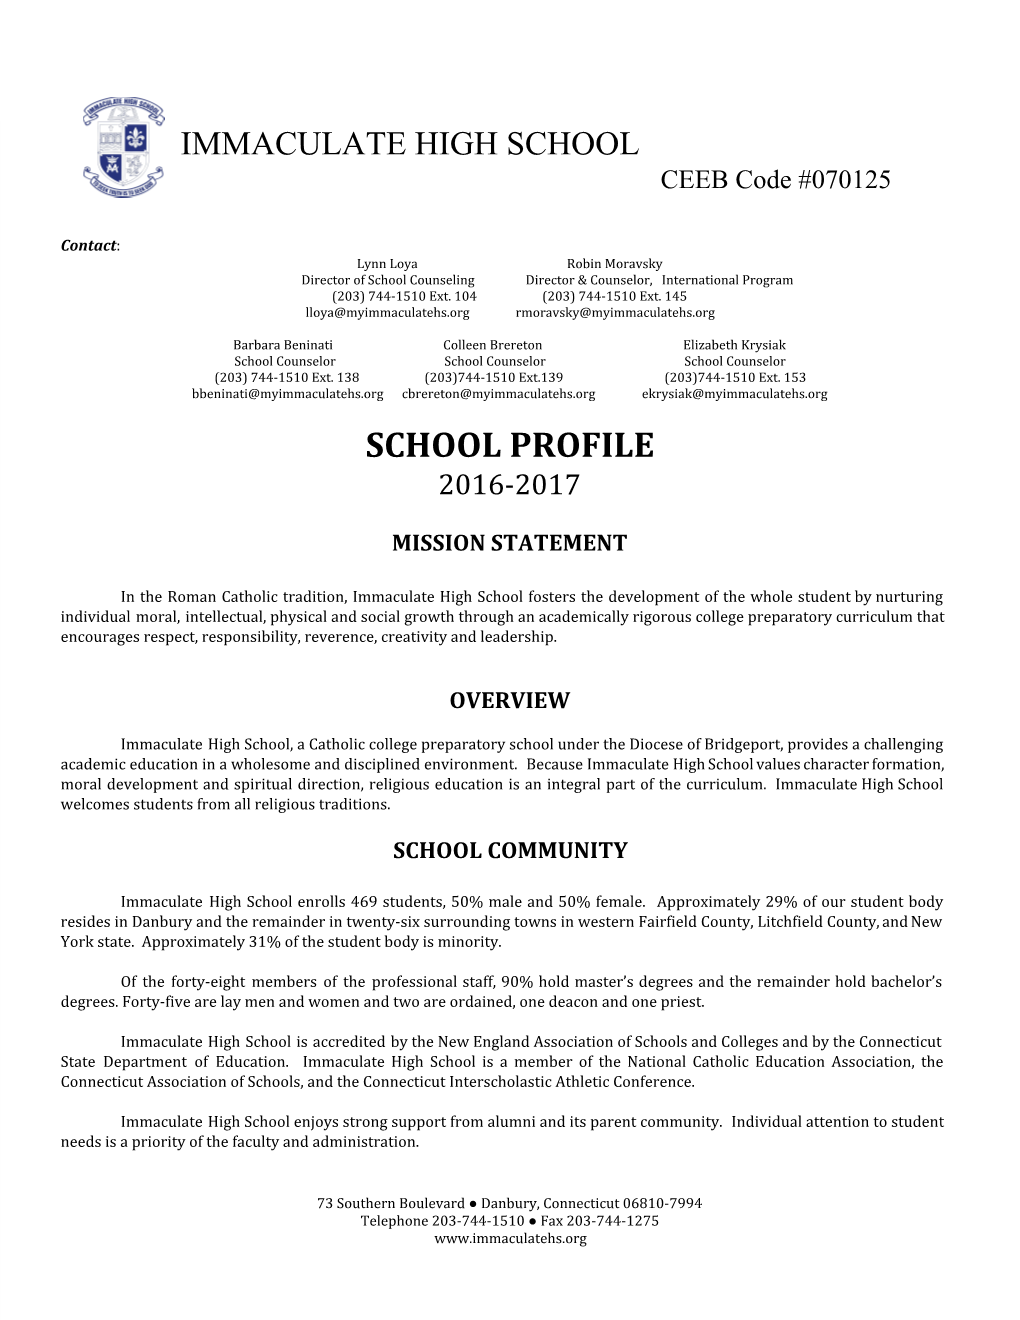 School Profile 2016­2017